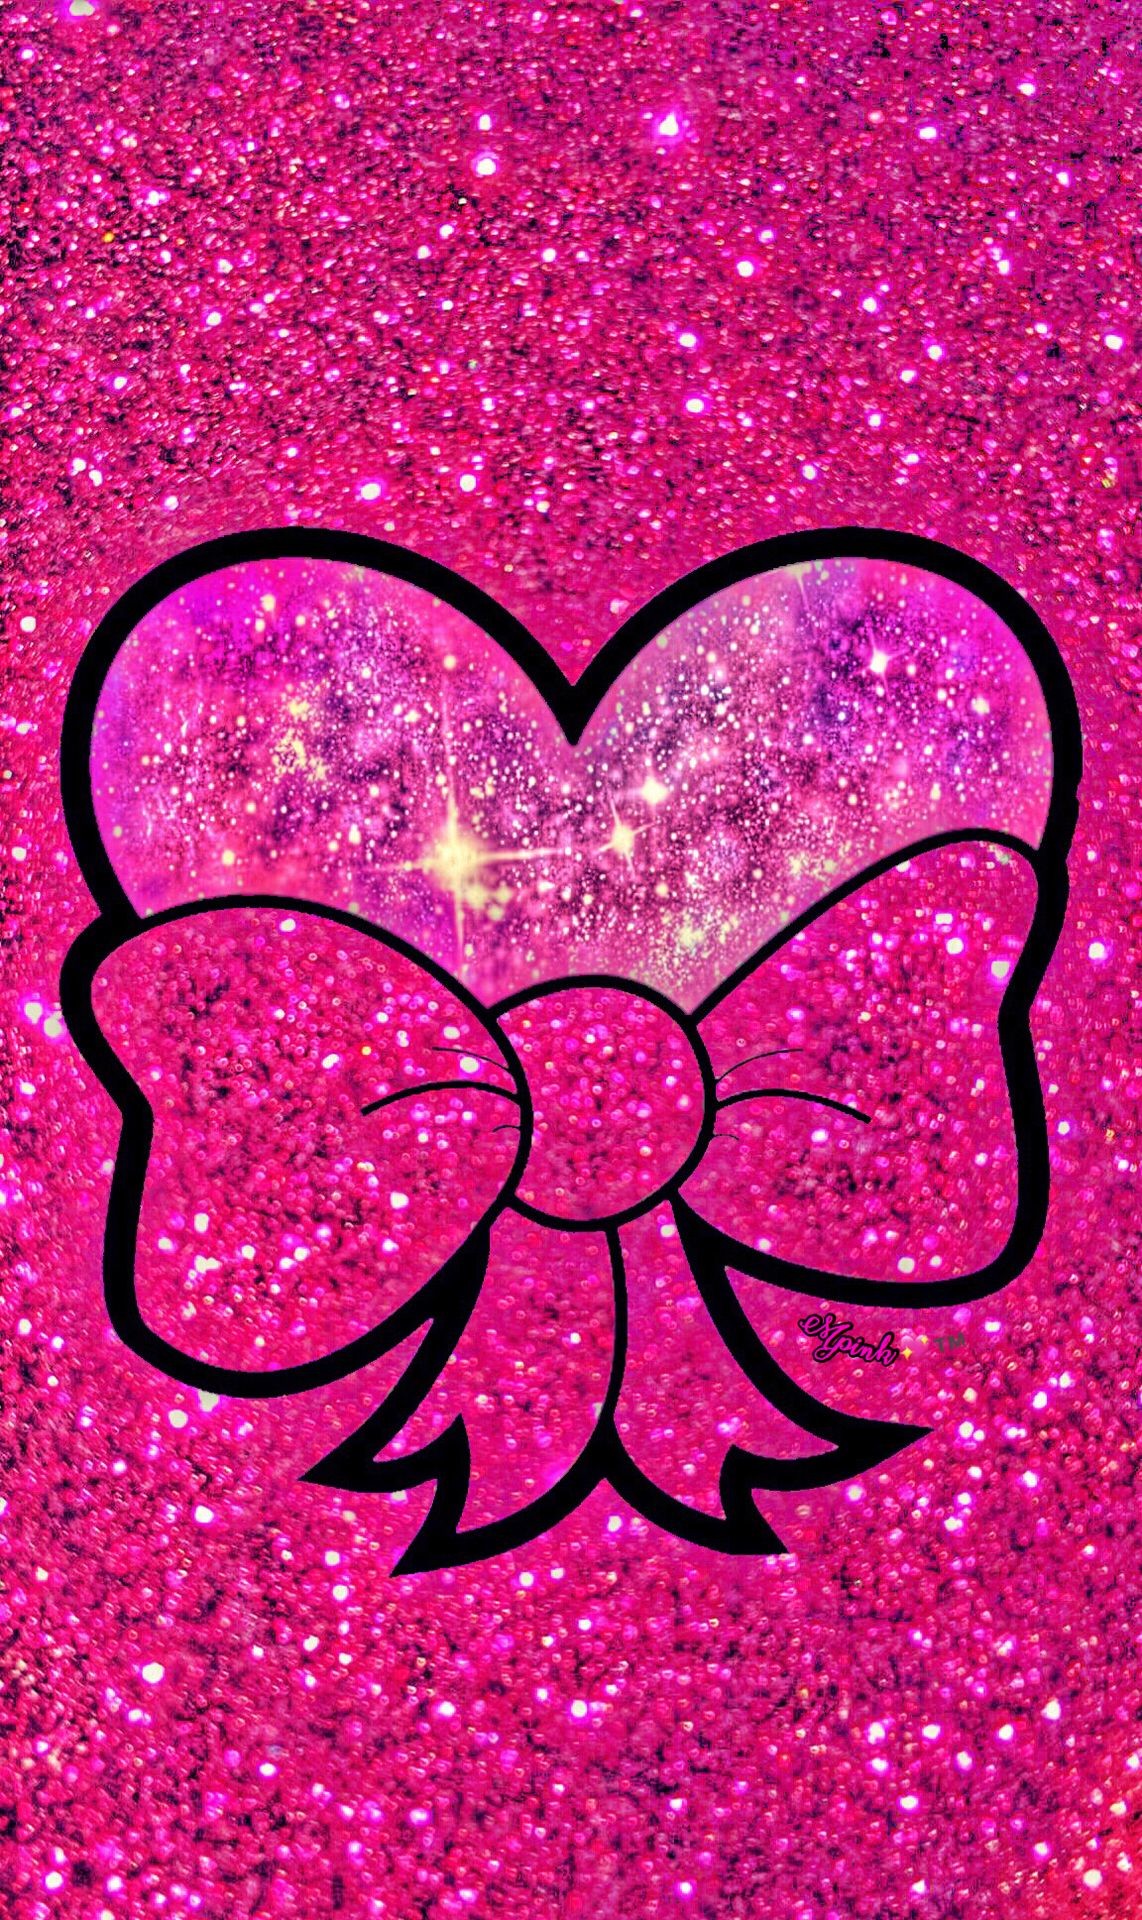 1142x1920 Pink Bling Heart Galaxy Wallpaper #androidwallpaper #iphonewallpaper # wallpaper #galaxy #sparkle #glitter #lockscreen #pretty #pink #cute #girly # pink ...